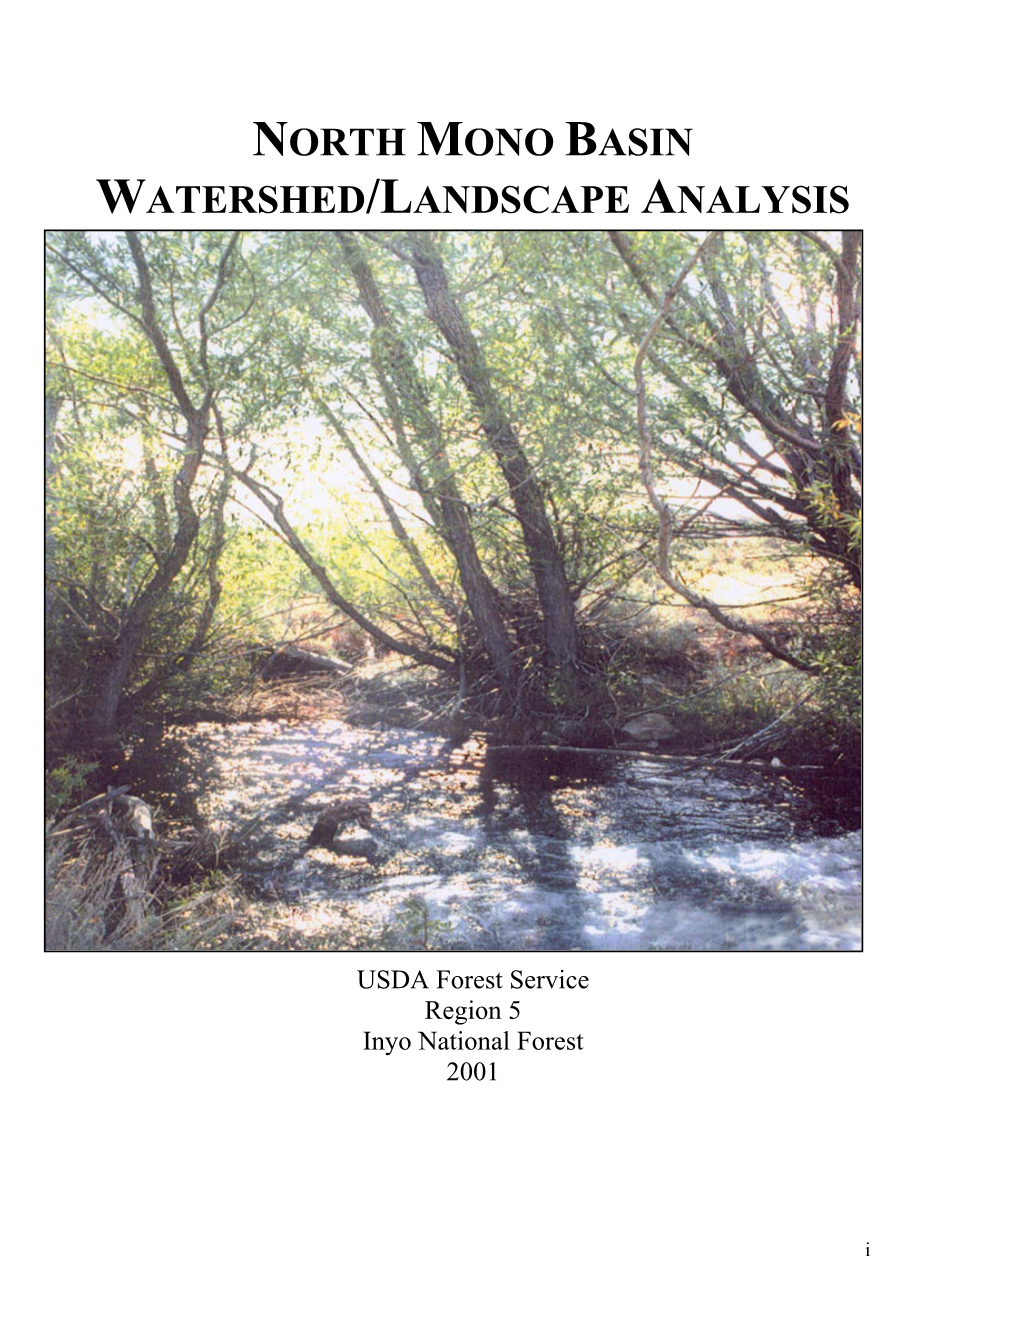 North Mono Basin Watershed/Landscape Analysis, 2001